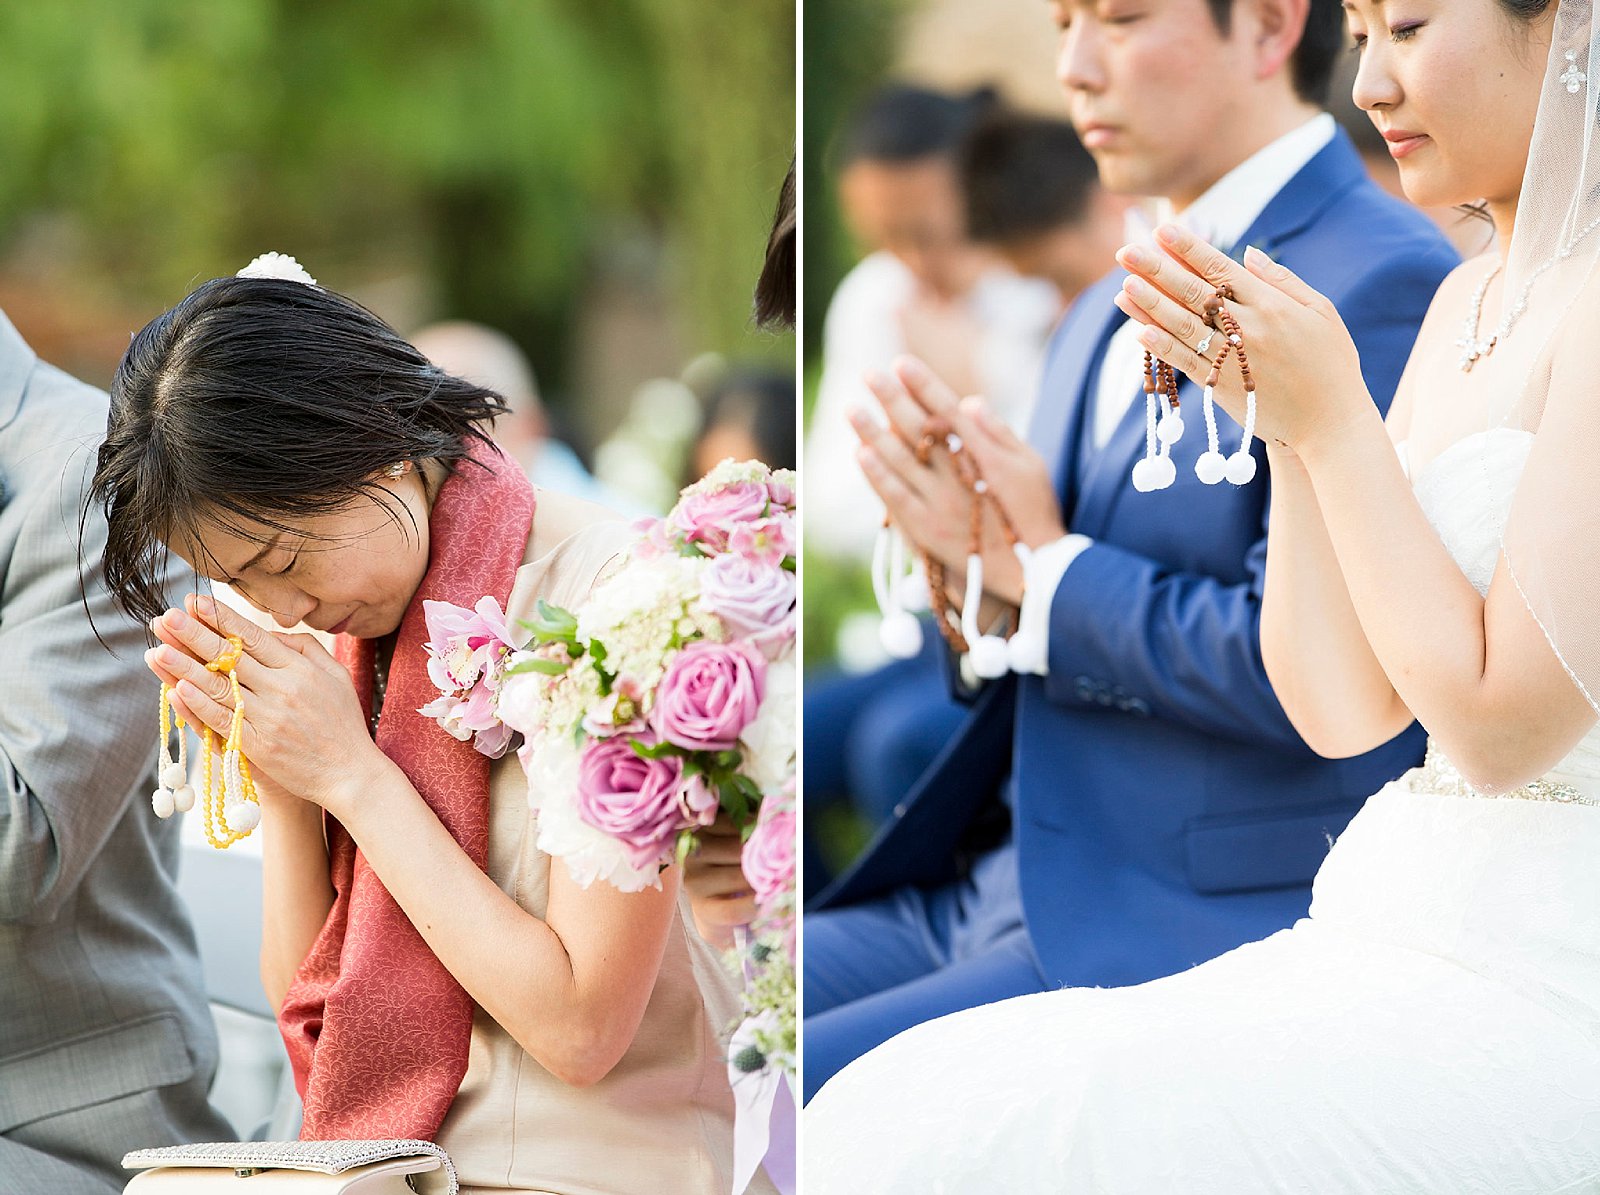 Randi Michelle Photography photographs traditional Buddhist wedding ceremony traditions